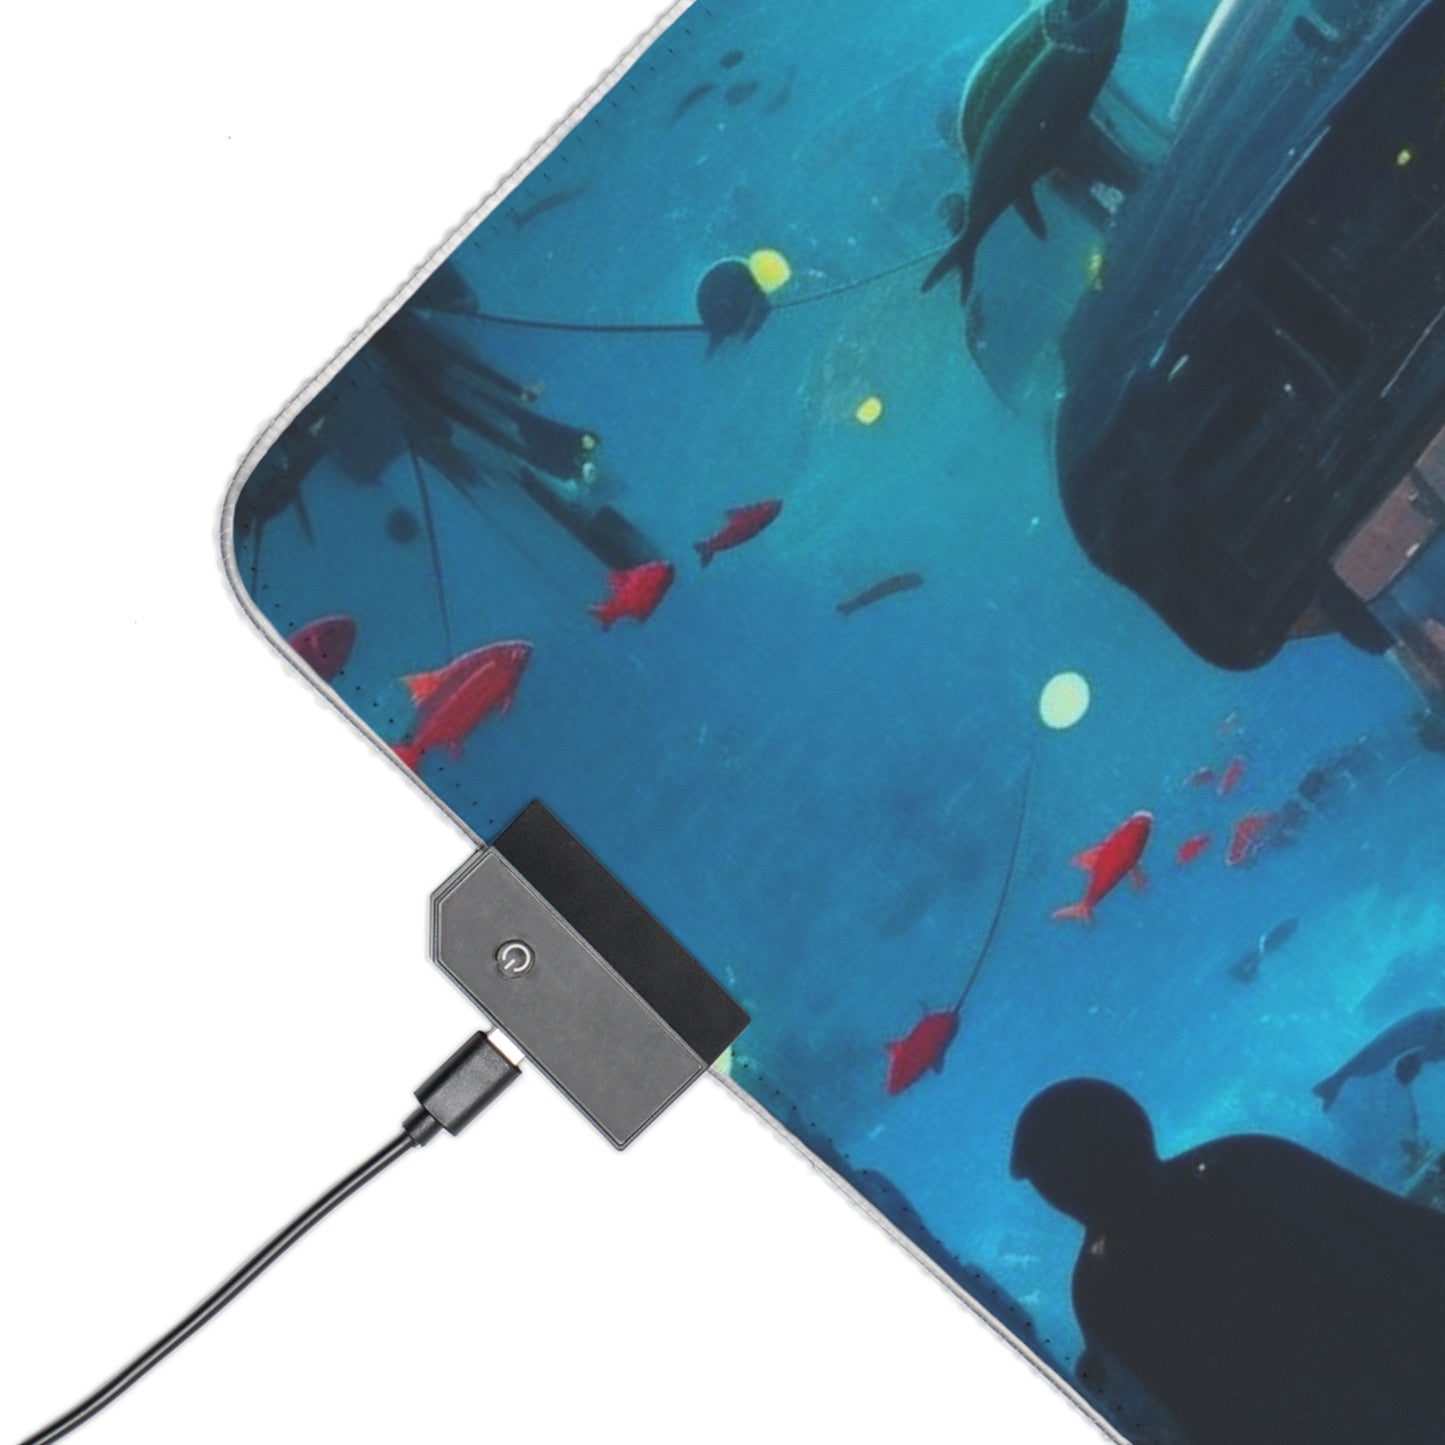 Aquatic Haven-2 LED Gaming Mouse Pad